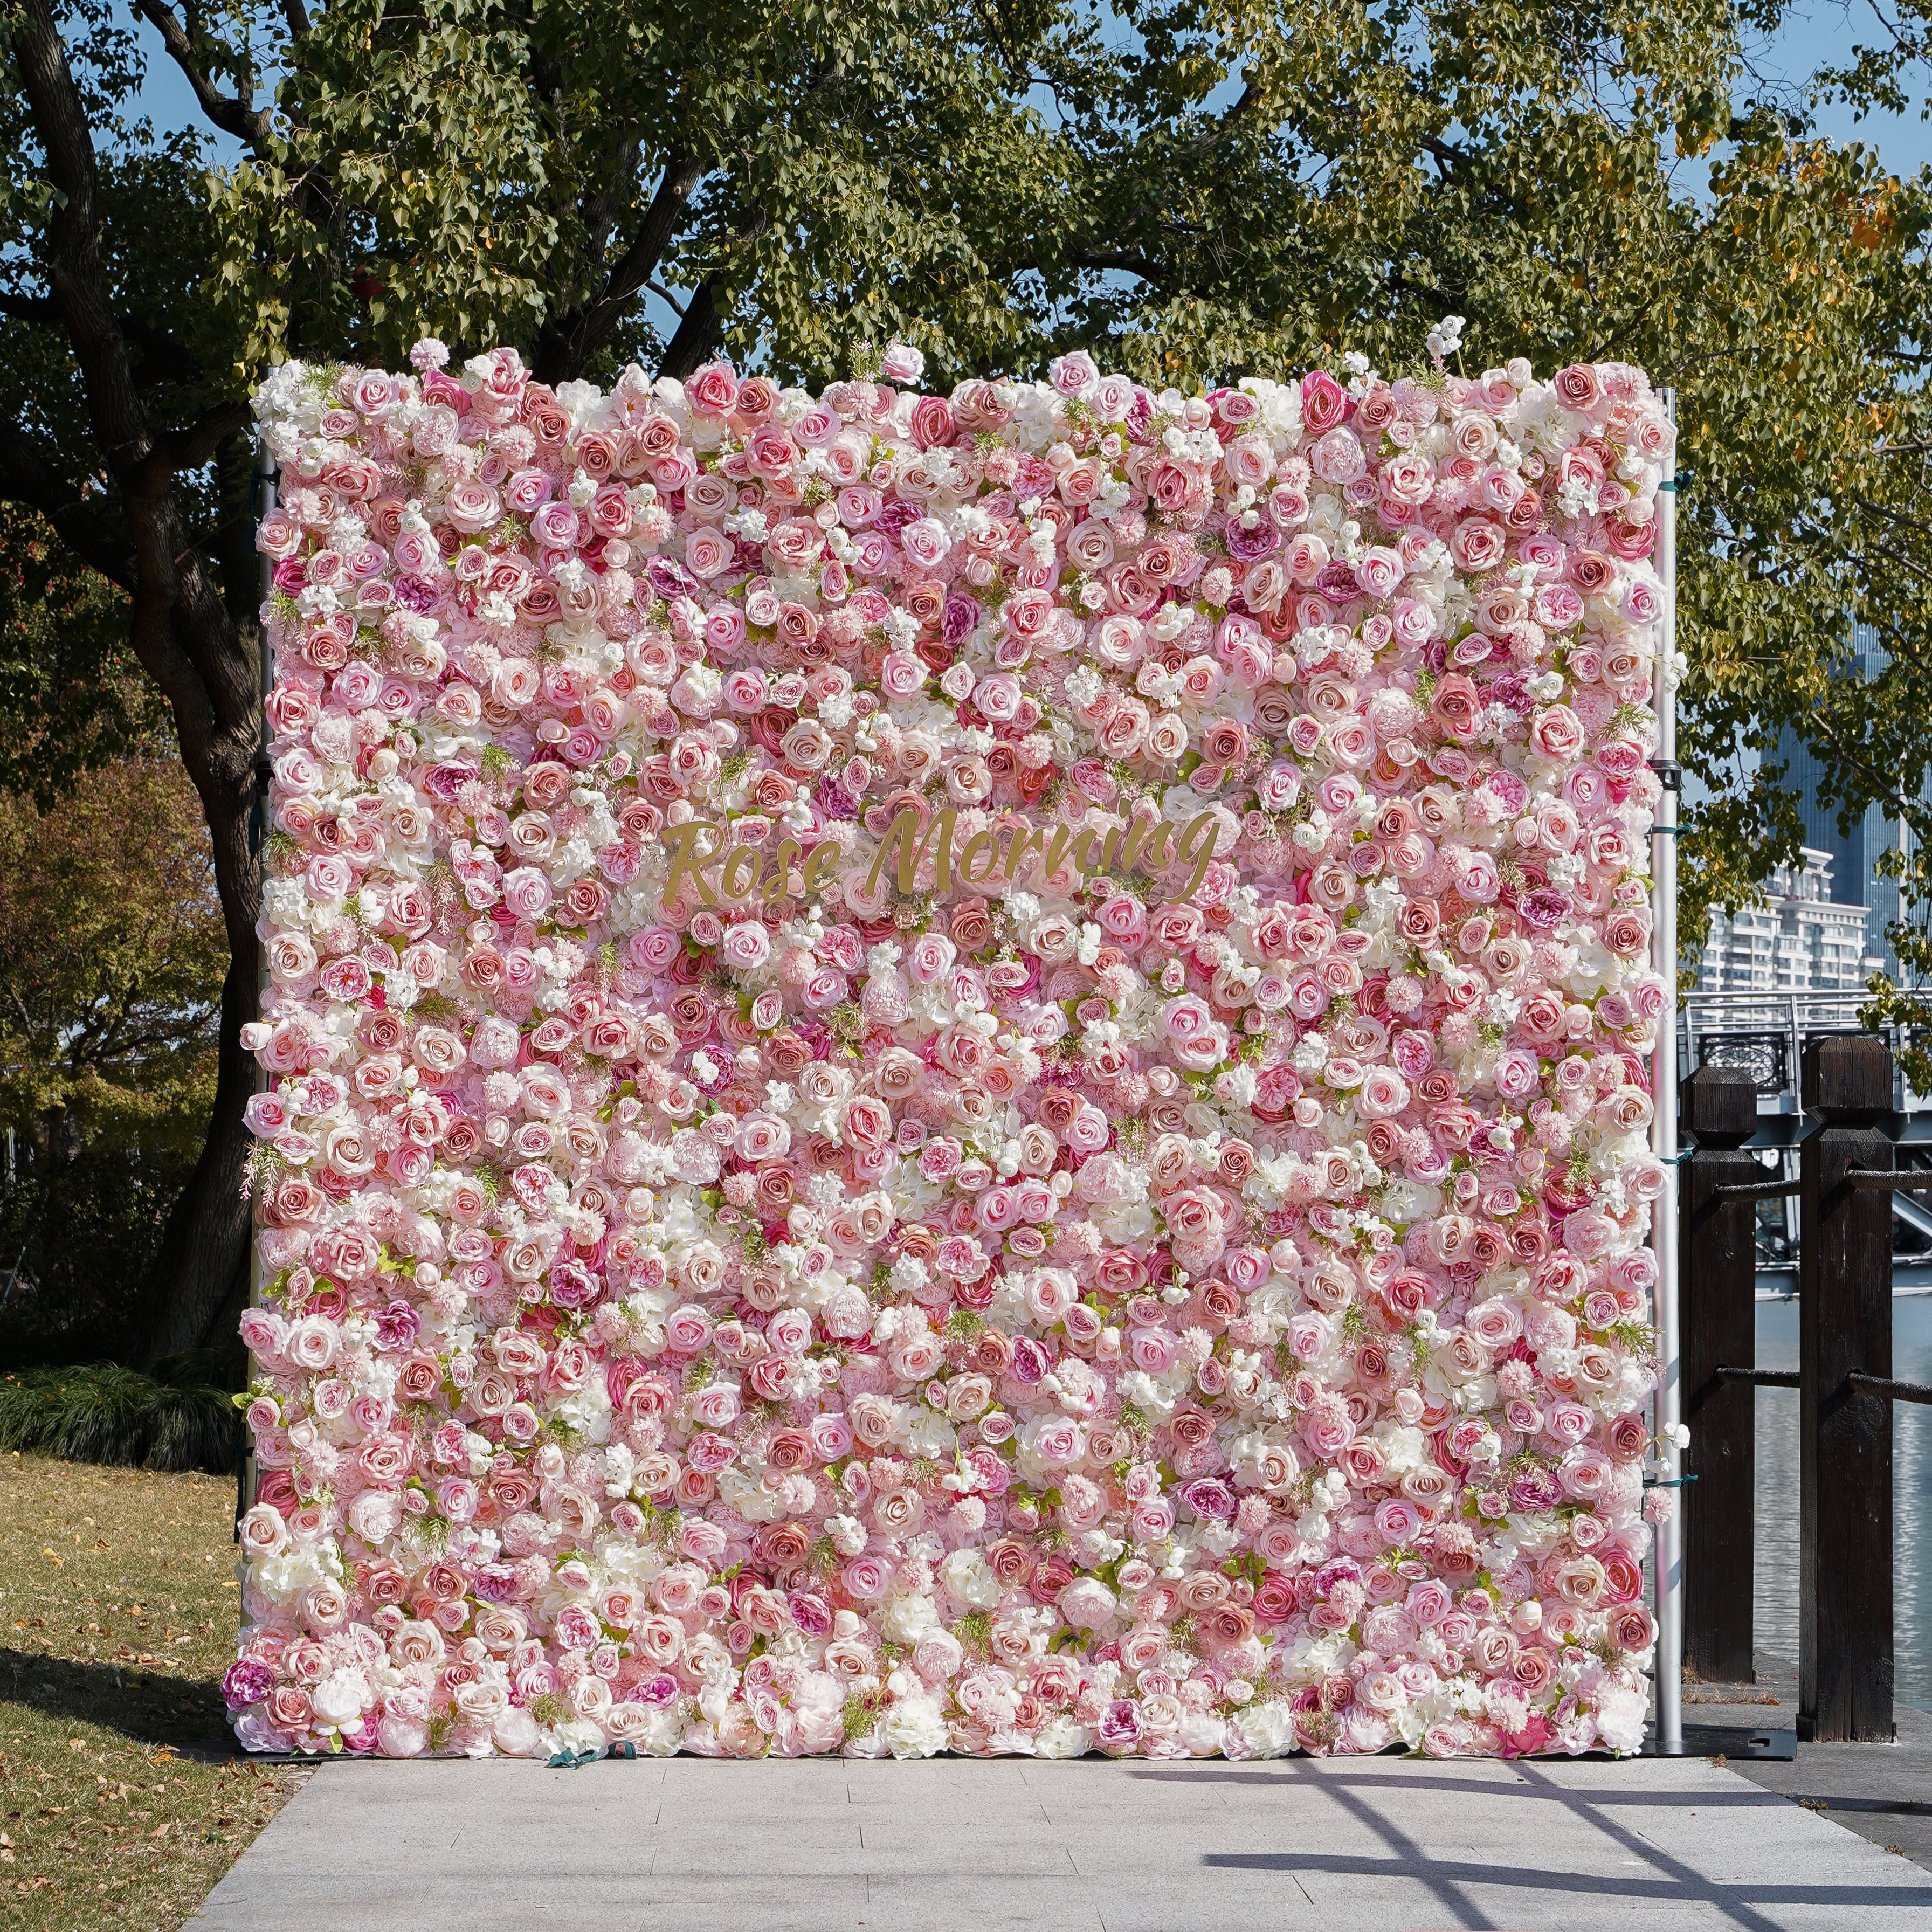 Flower Wall,Artificial Flower,Rolling Up Curtain Flower Wall,Aapo: 3D Fabric Artificial Flower Wall Rolling Up Curtain Flower Wall R110 - 8ft*8ft,Rose Morning